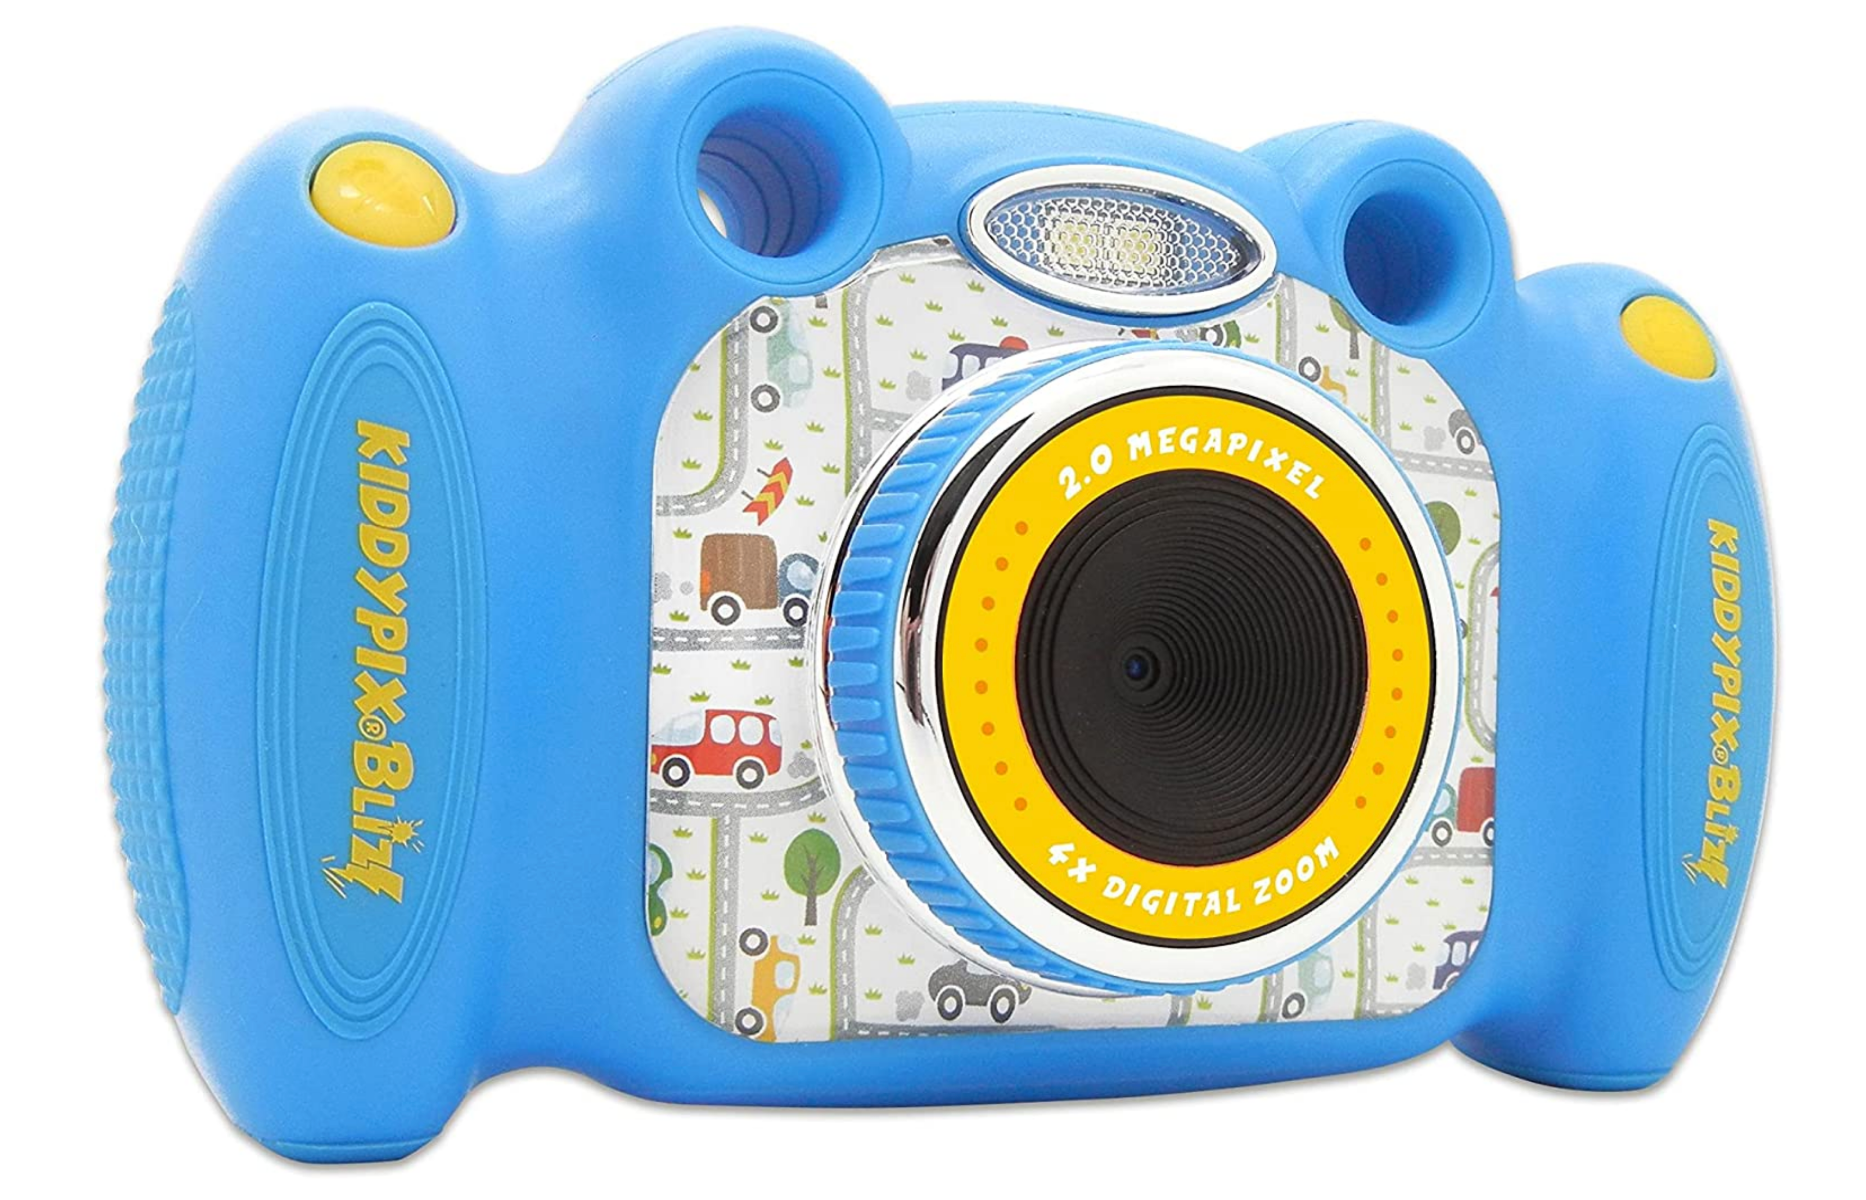 Product Image of Easypix Kiddypix - Blizz (Blue) Digital camera for children - Blue